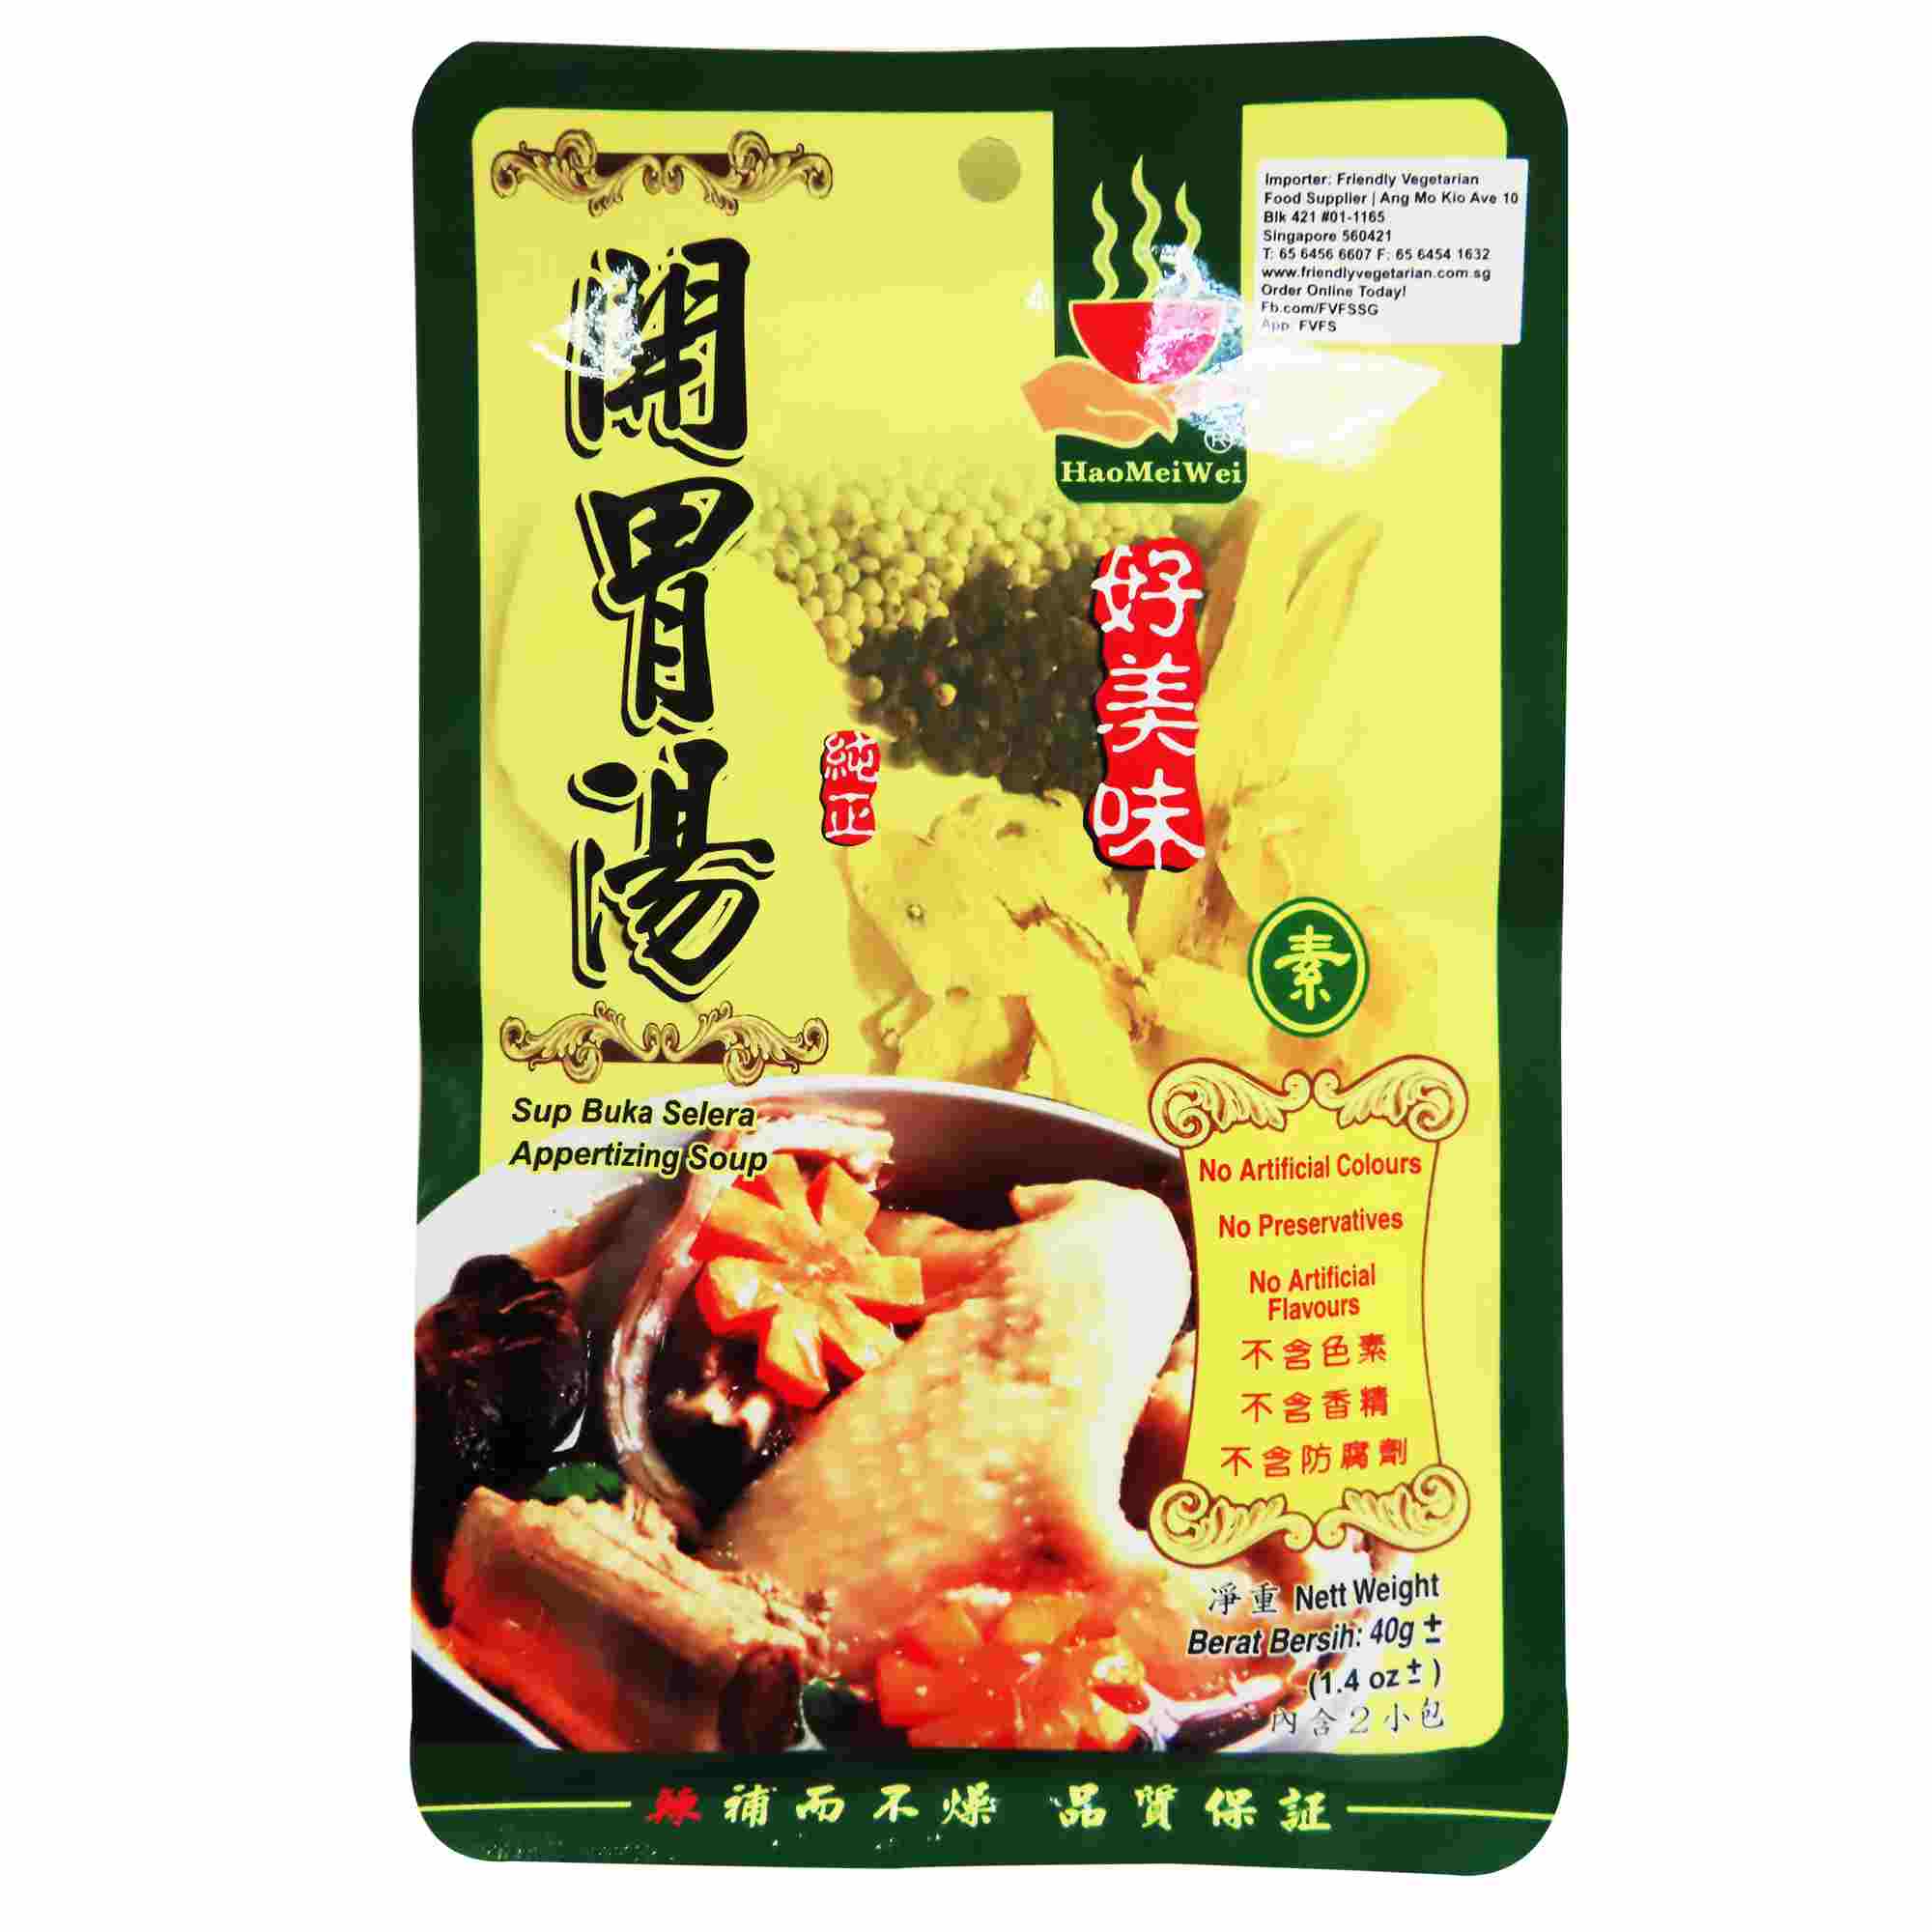 Image Appertizing Soup 好美味 - 开胃汤包 40grams